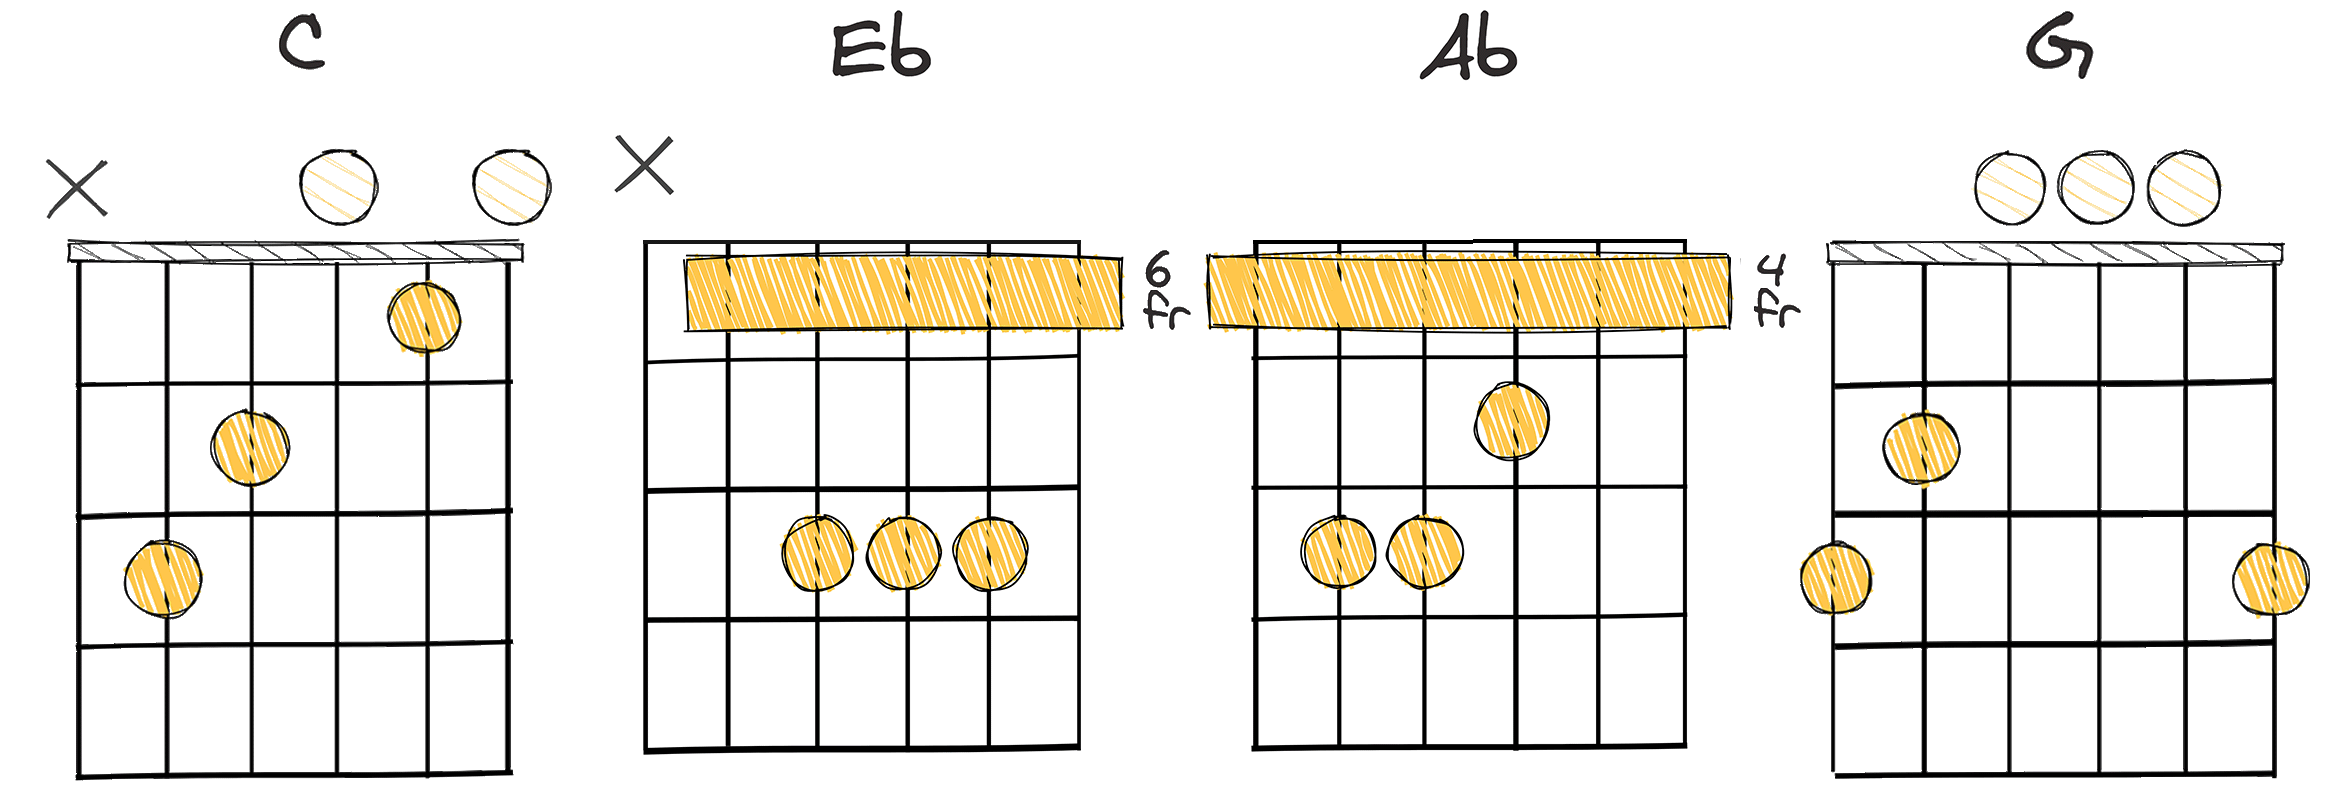 I-bIII-bVI-V (1-b3-b6-5) chords diagram